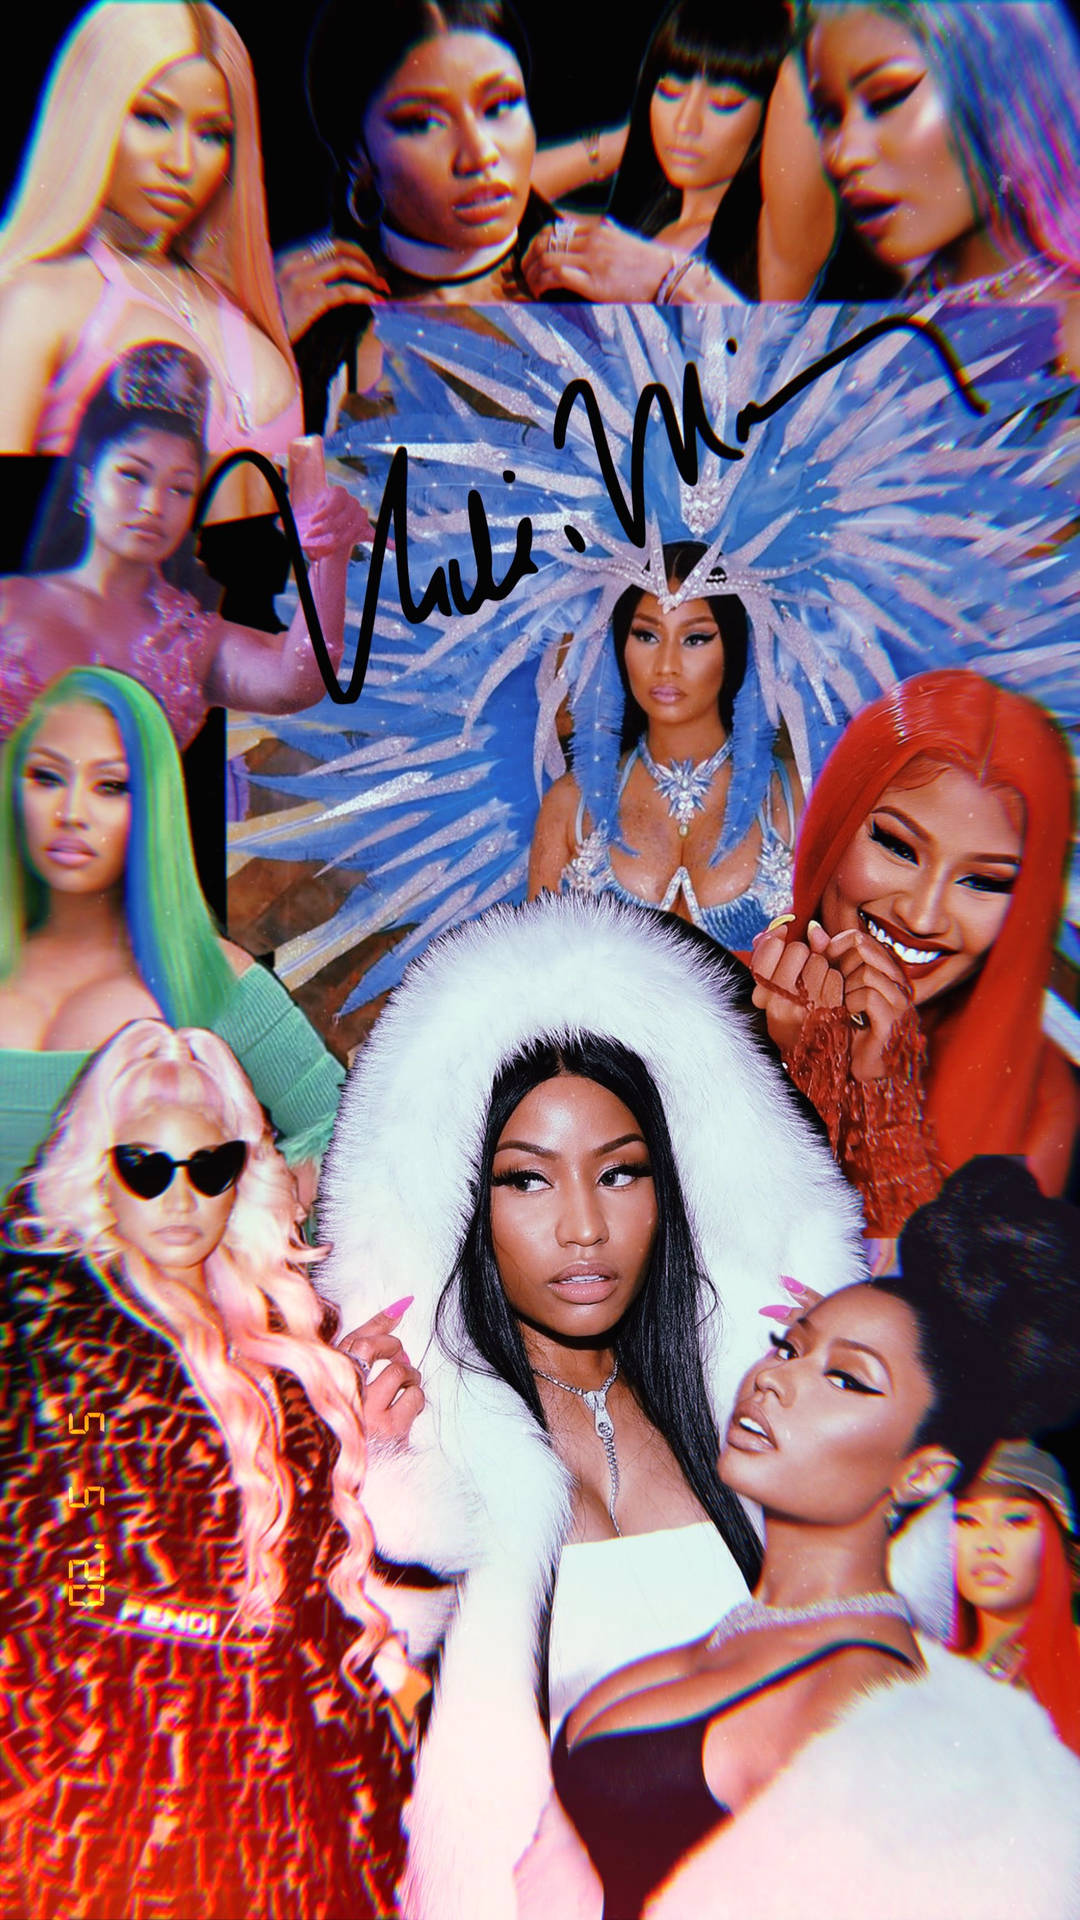 Nicki Minaj Autograph Image Wallpaper